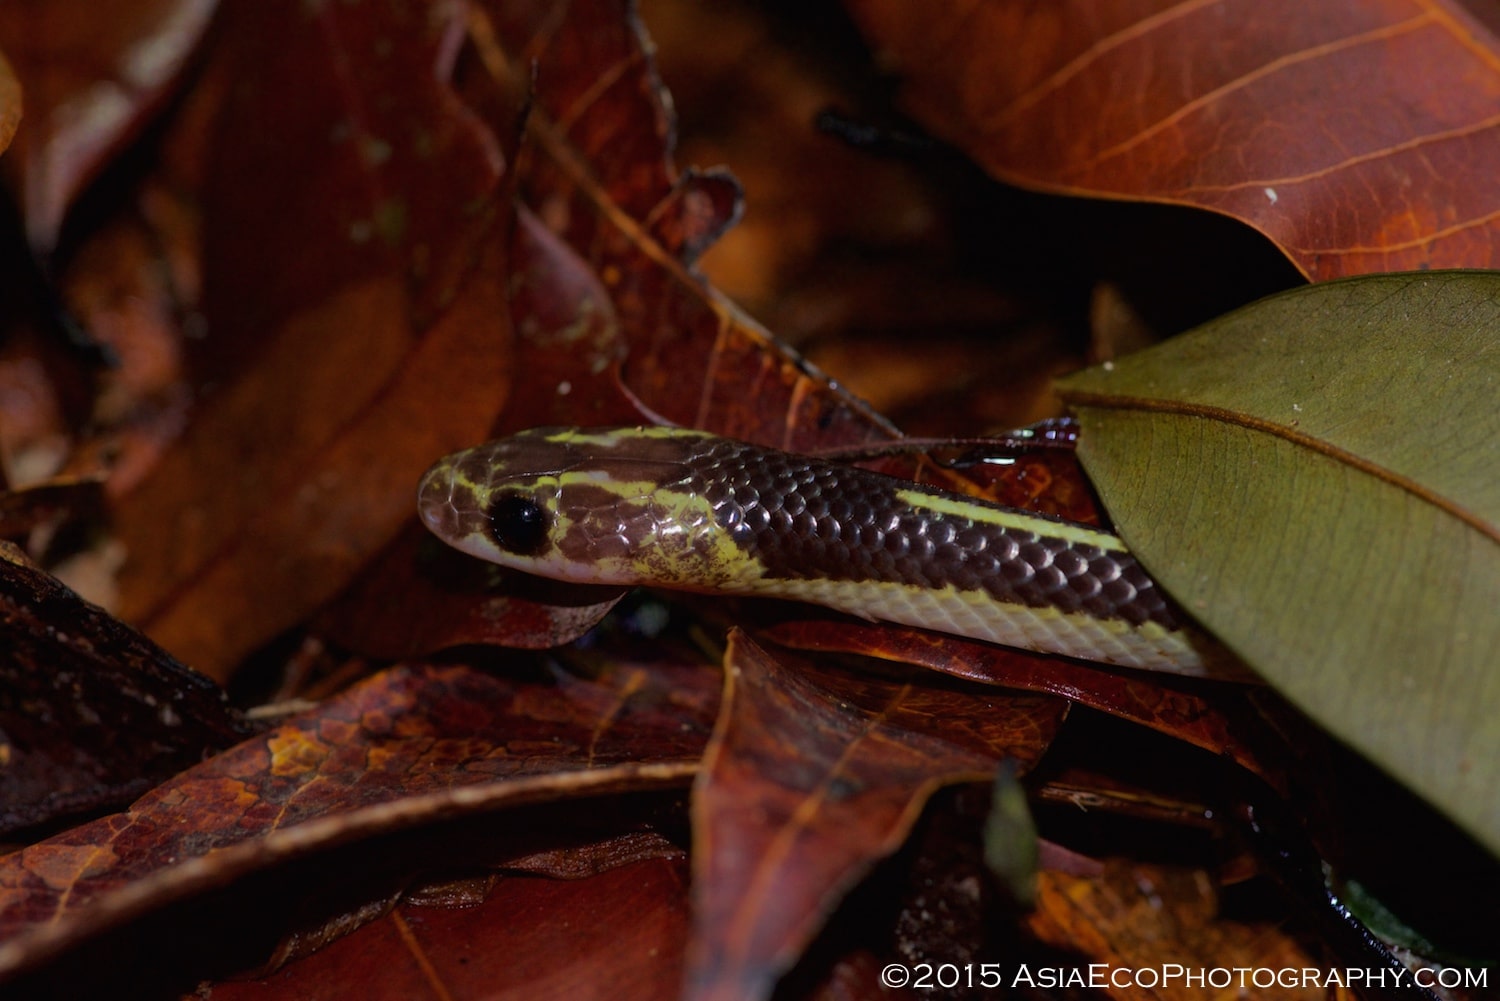 Malayan Bridle Snake - Dryocalamus subannulatus in Thailand primary rainforest in Krabi province on the Malaysian Peninsula.